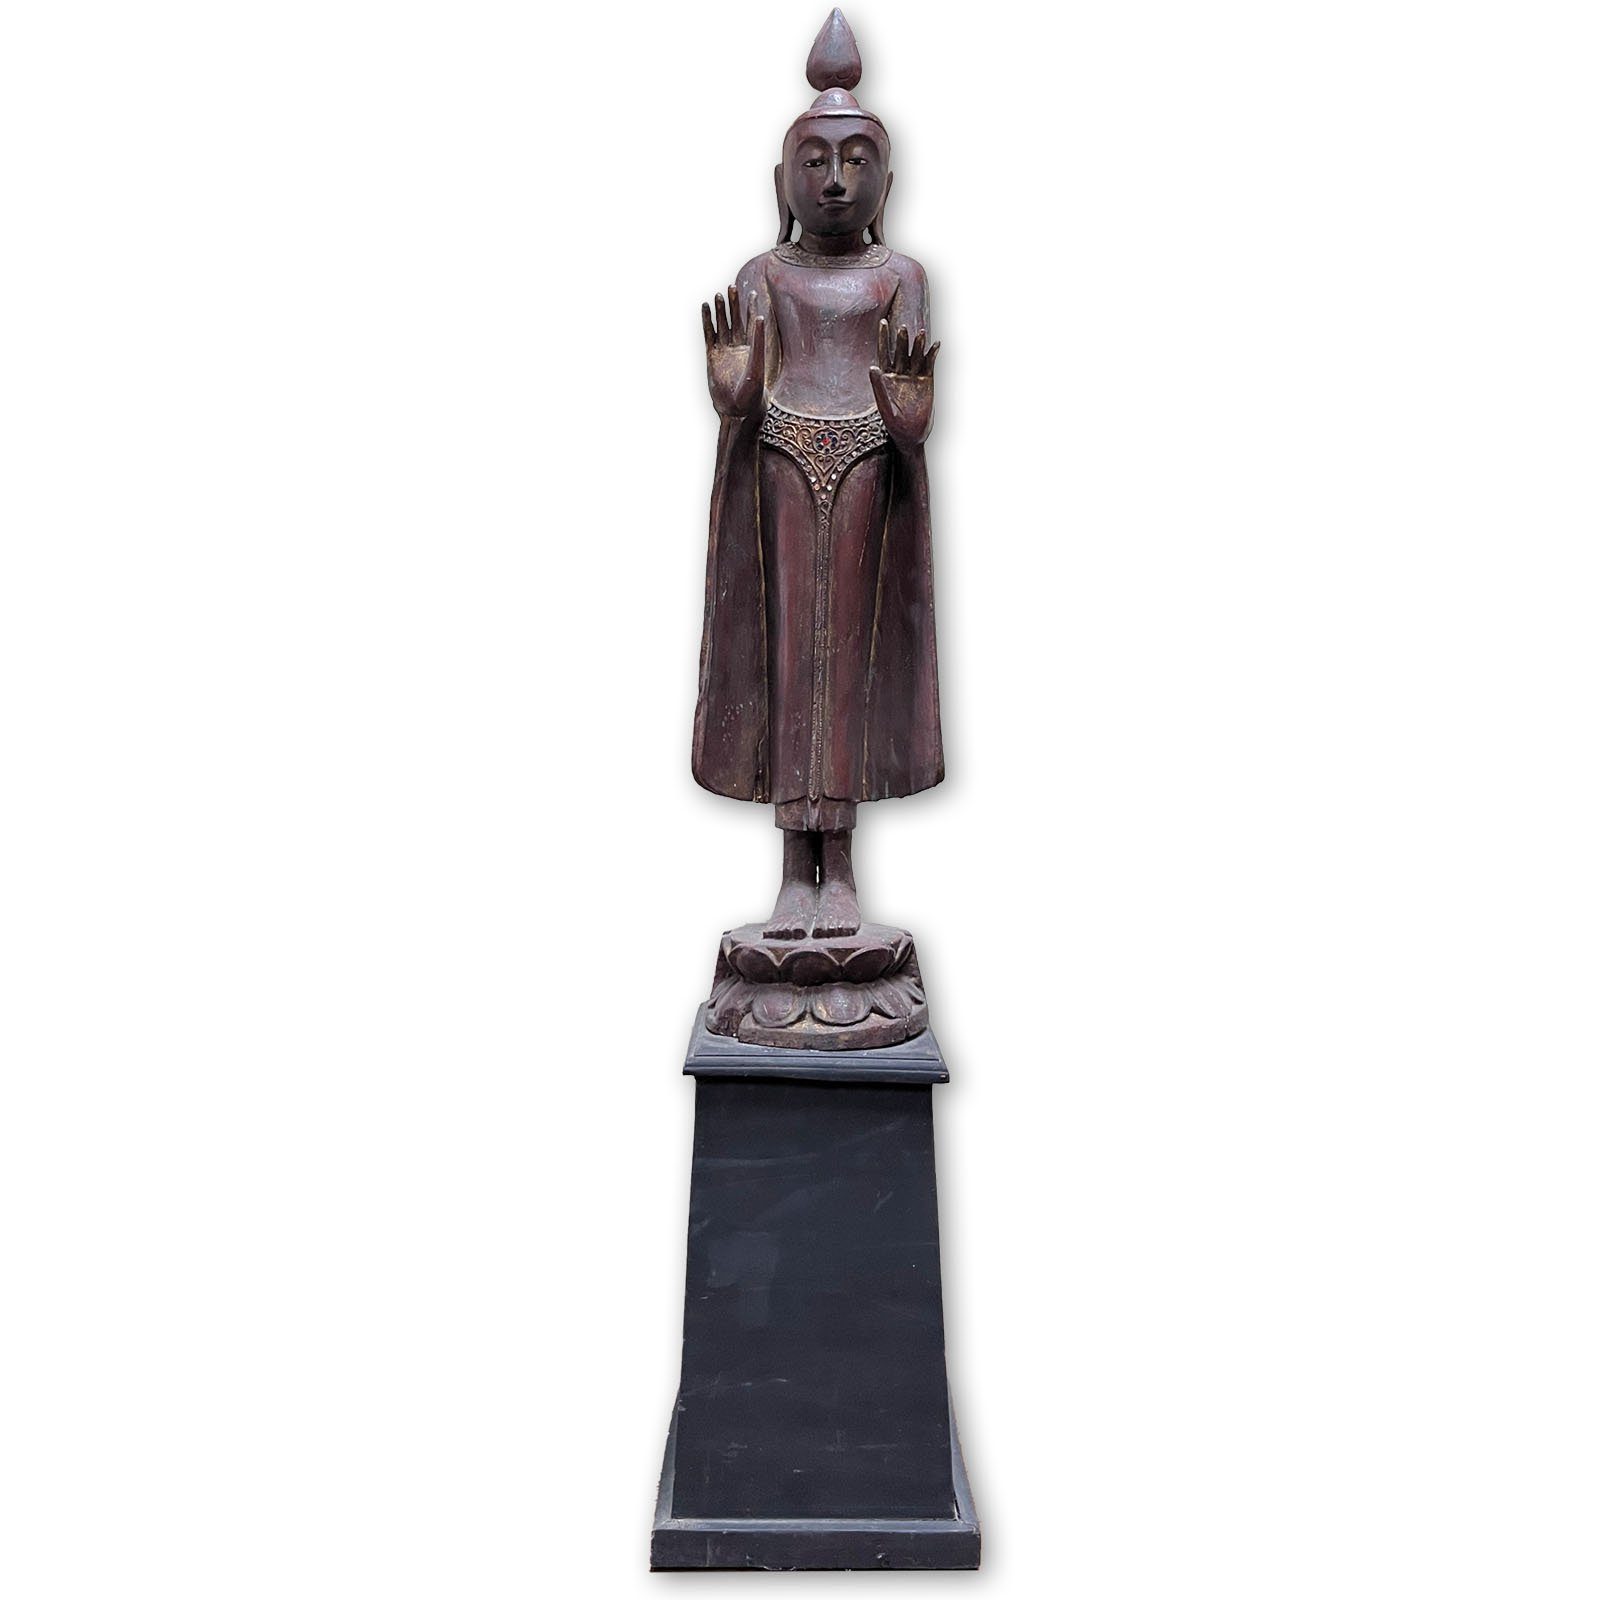 Buddha Mandalay - Buddhafigur LifeStyle 122cm groß Statue Burma Asien stehend Holz